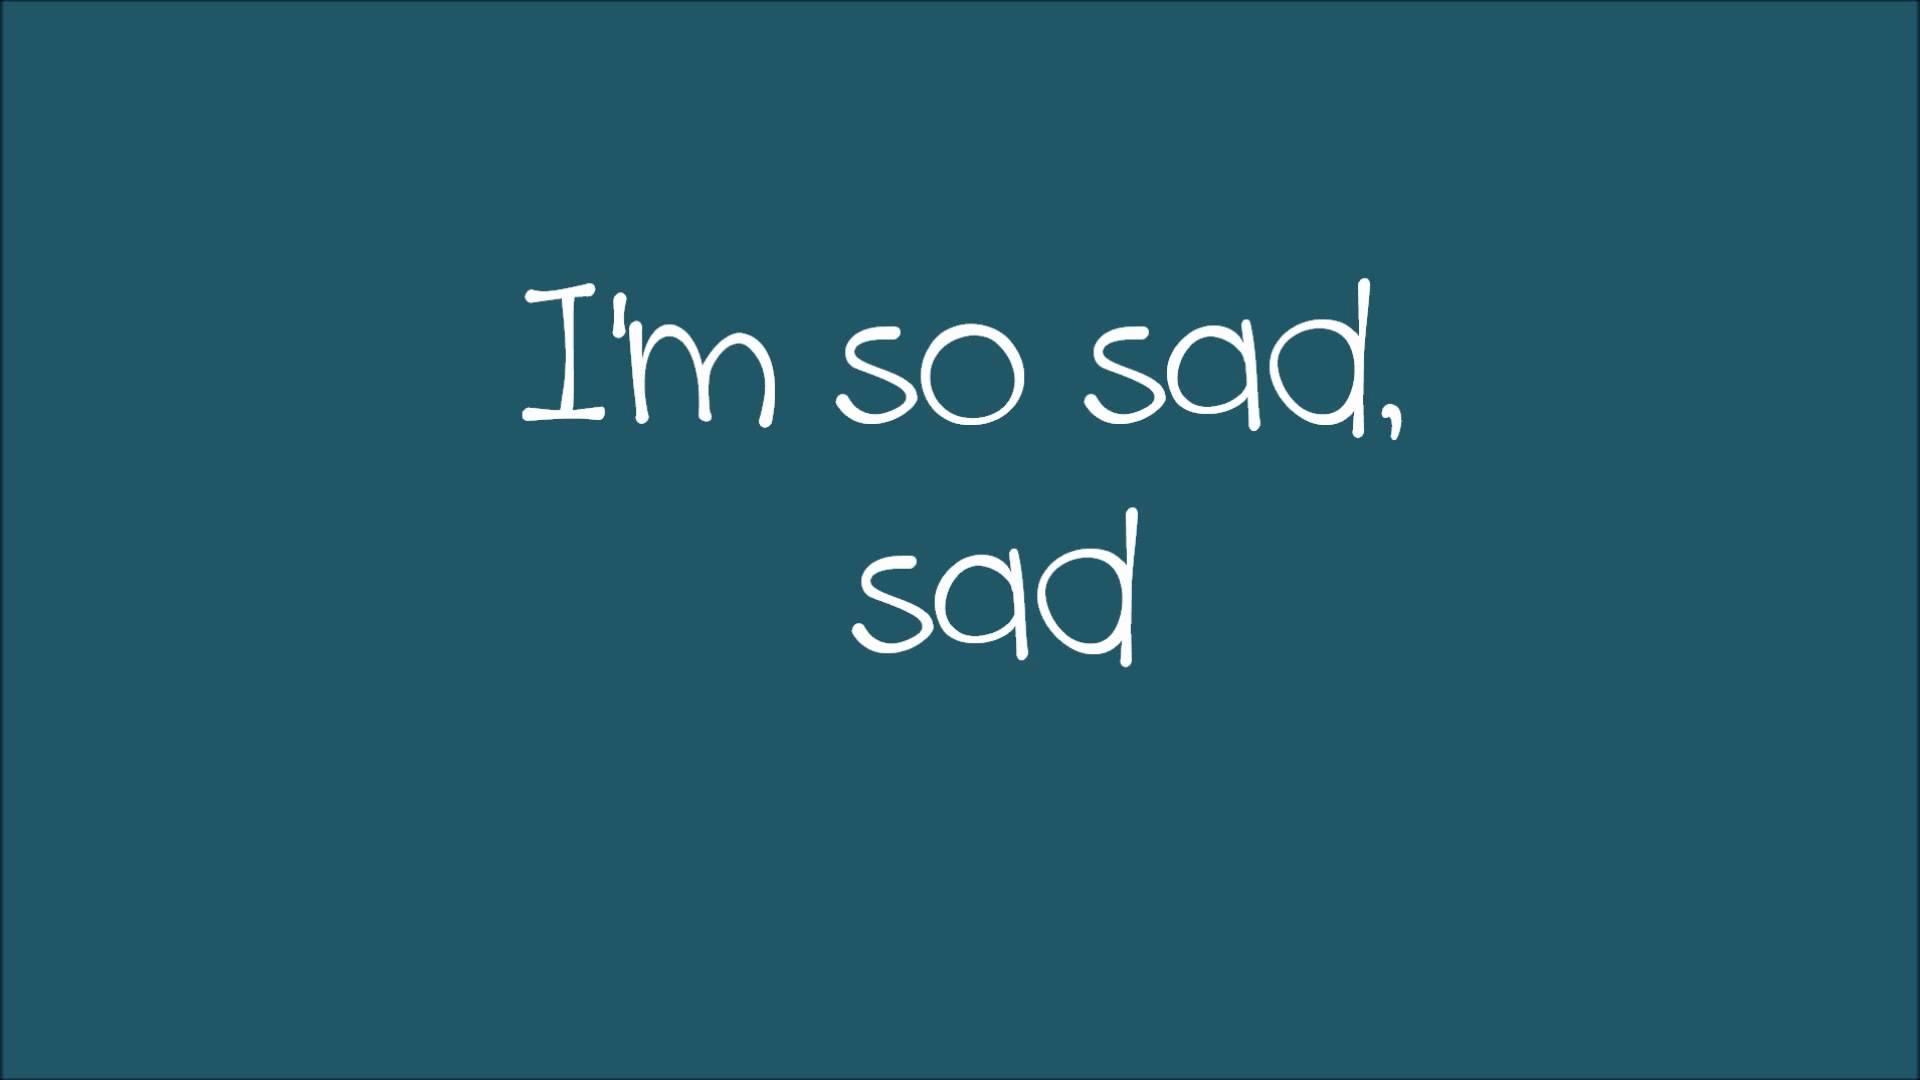 Life is sad. Sad name. One Sad. So Sad. Lyric Sad for Song.